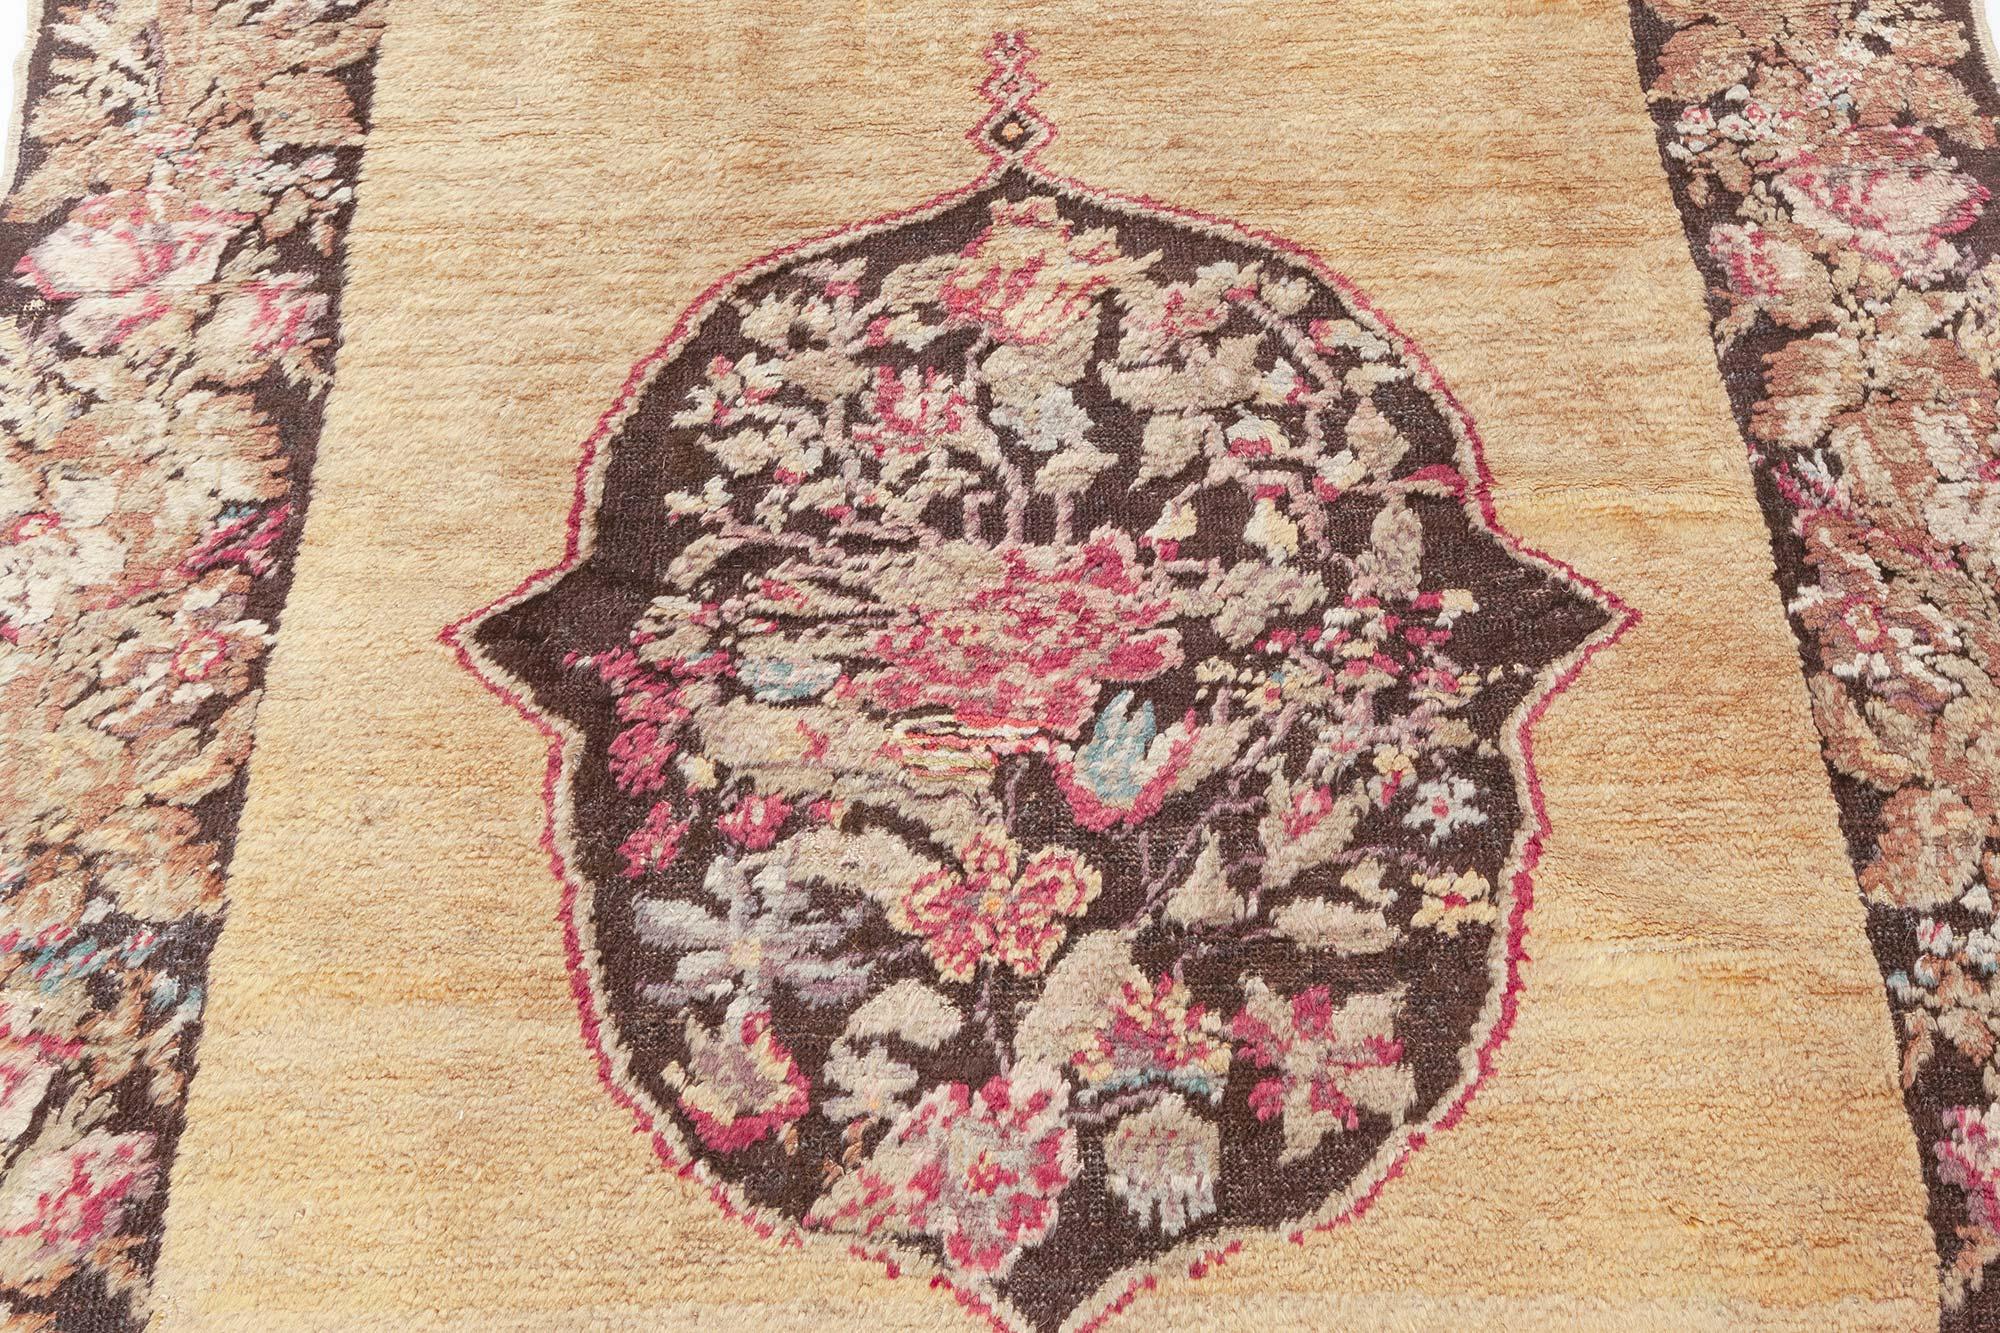 Early 20th century Karabagh black and pink flower design handmade wool rug
Size: 4'0